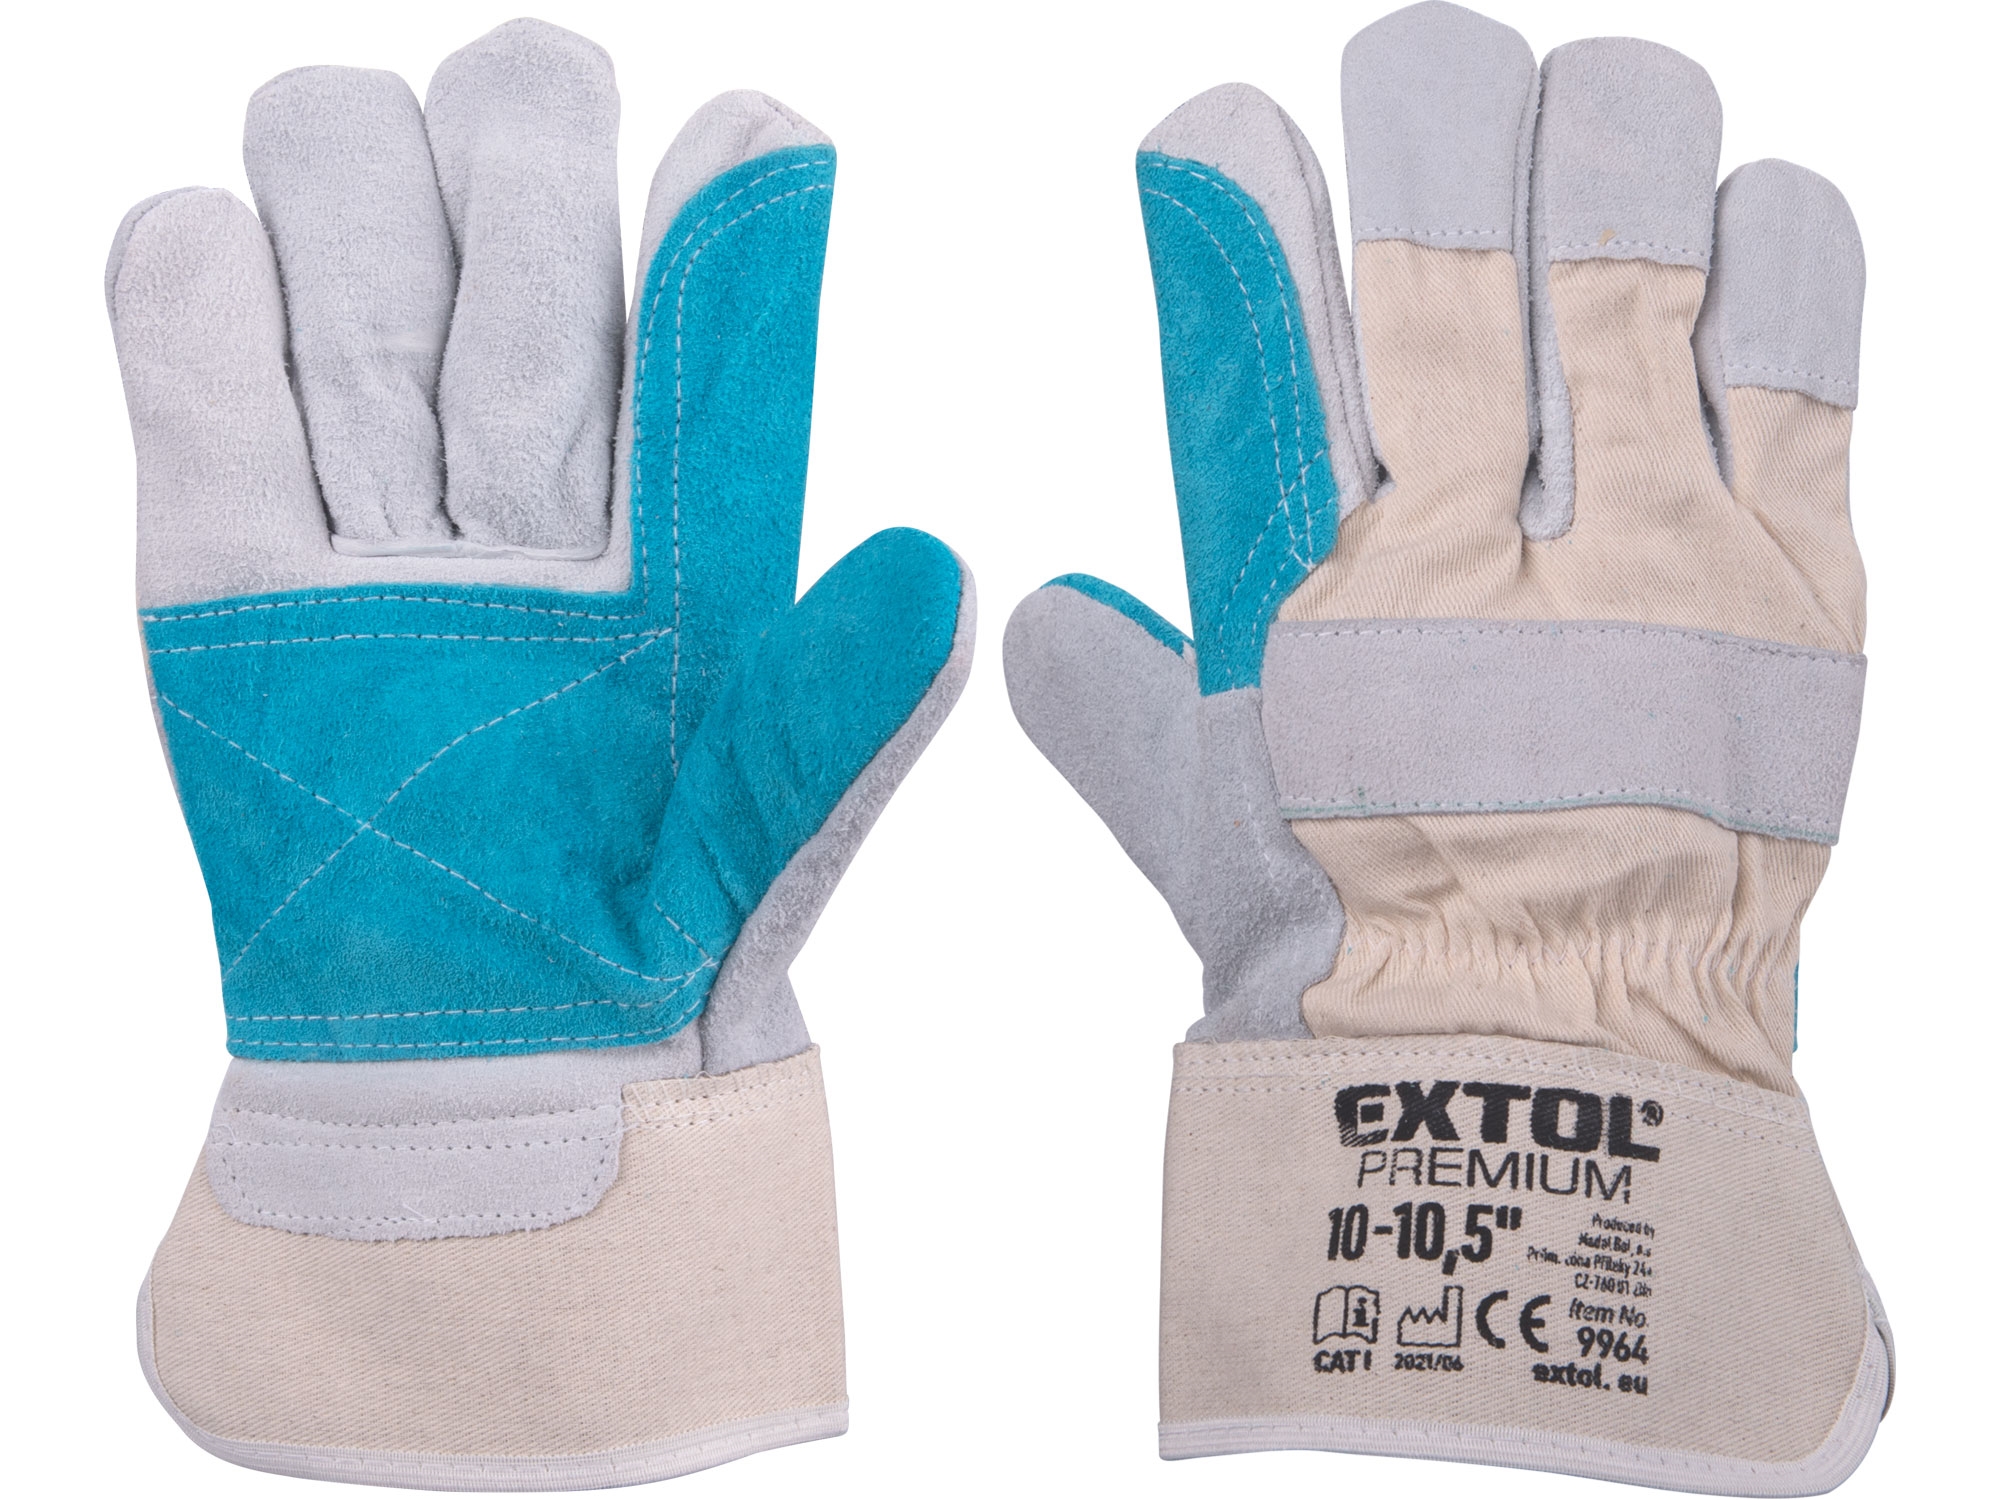 rukavice kožené silné s podšívkou v dlani, velikost 10"-10,5" - EXTOL PREMIUM